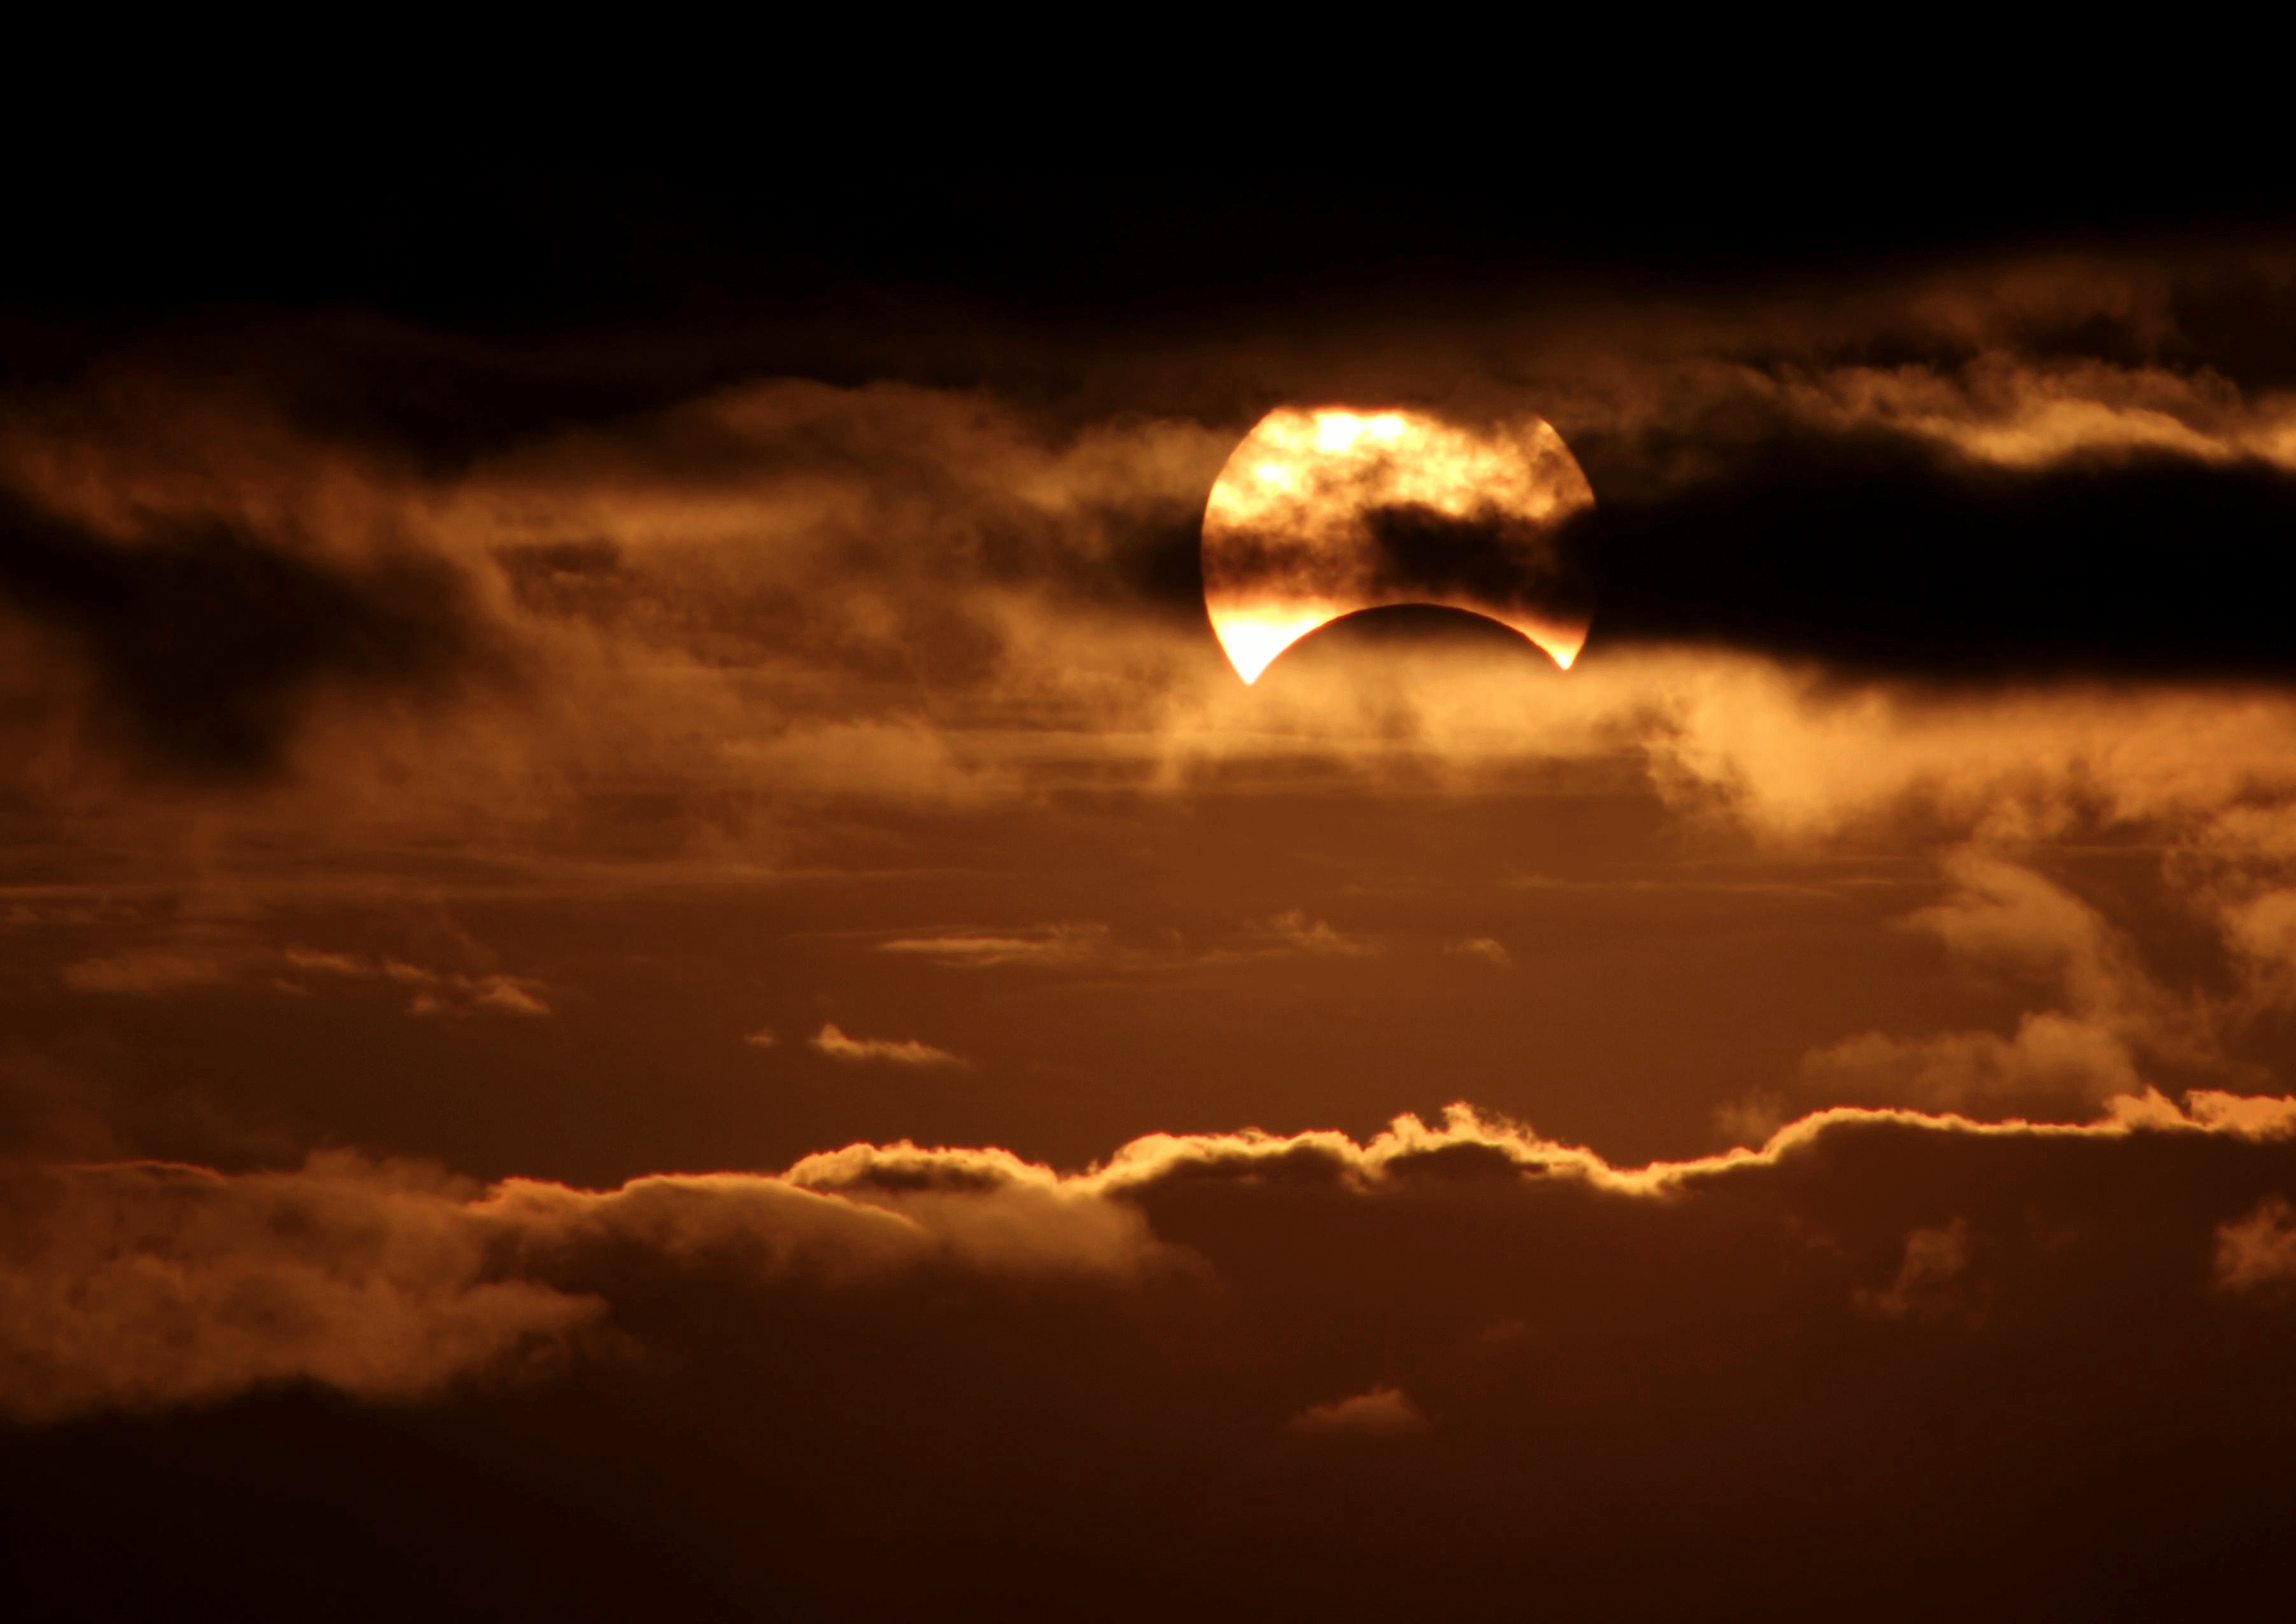 Hybrid Solar Eclipse of November 3, 2013. By Dan Ferry of Long Island, New York.